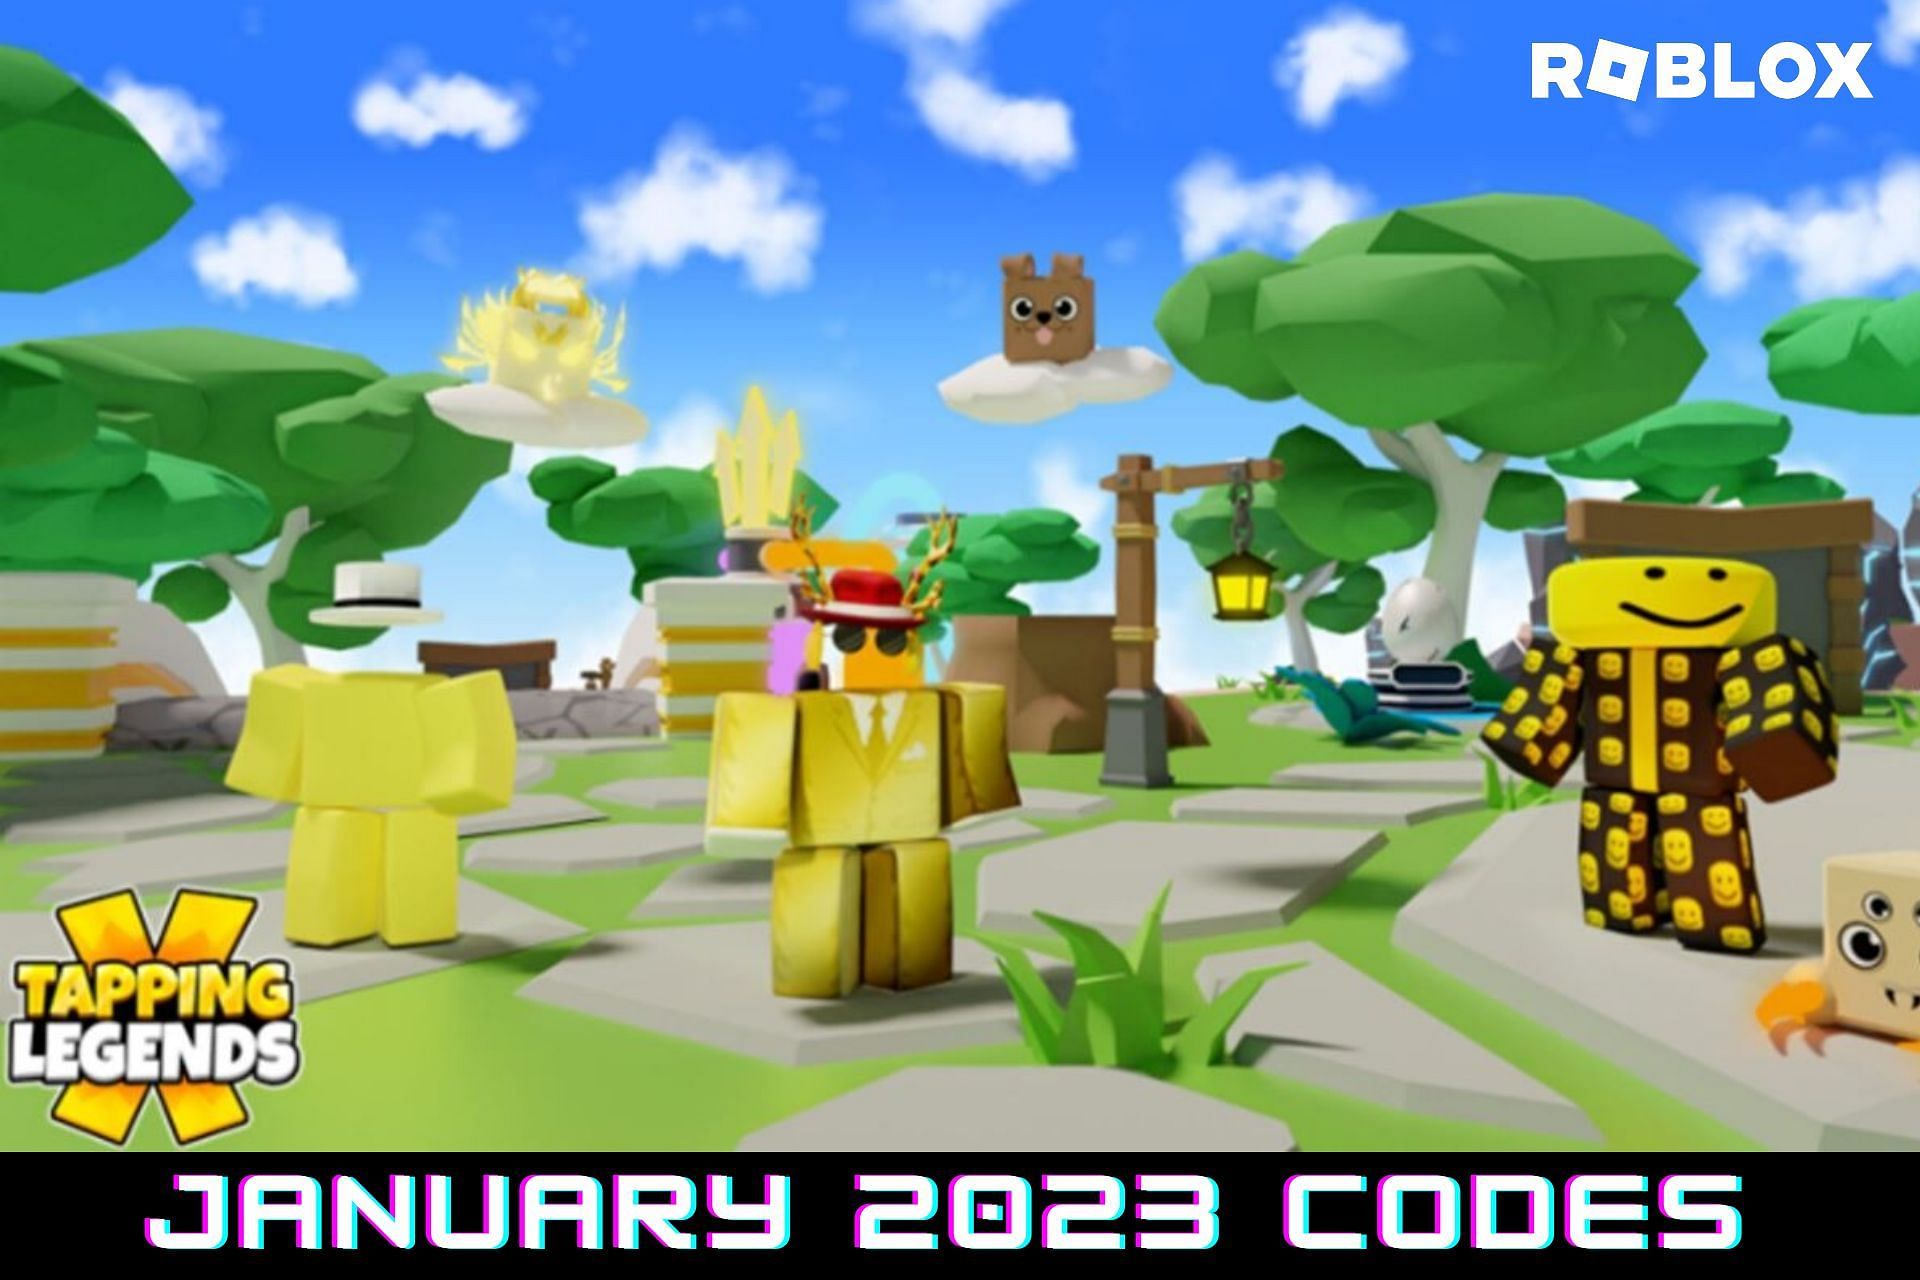 Roblox Rebirth Champions X Codes (December 2023)